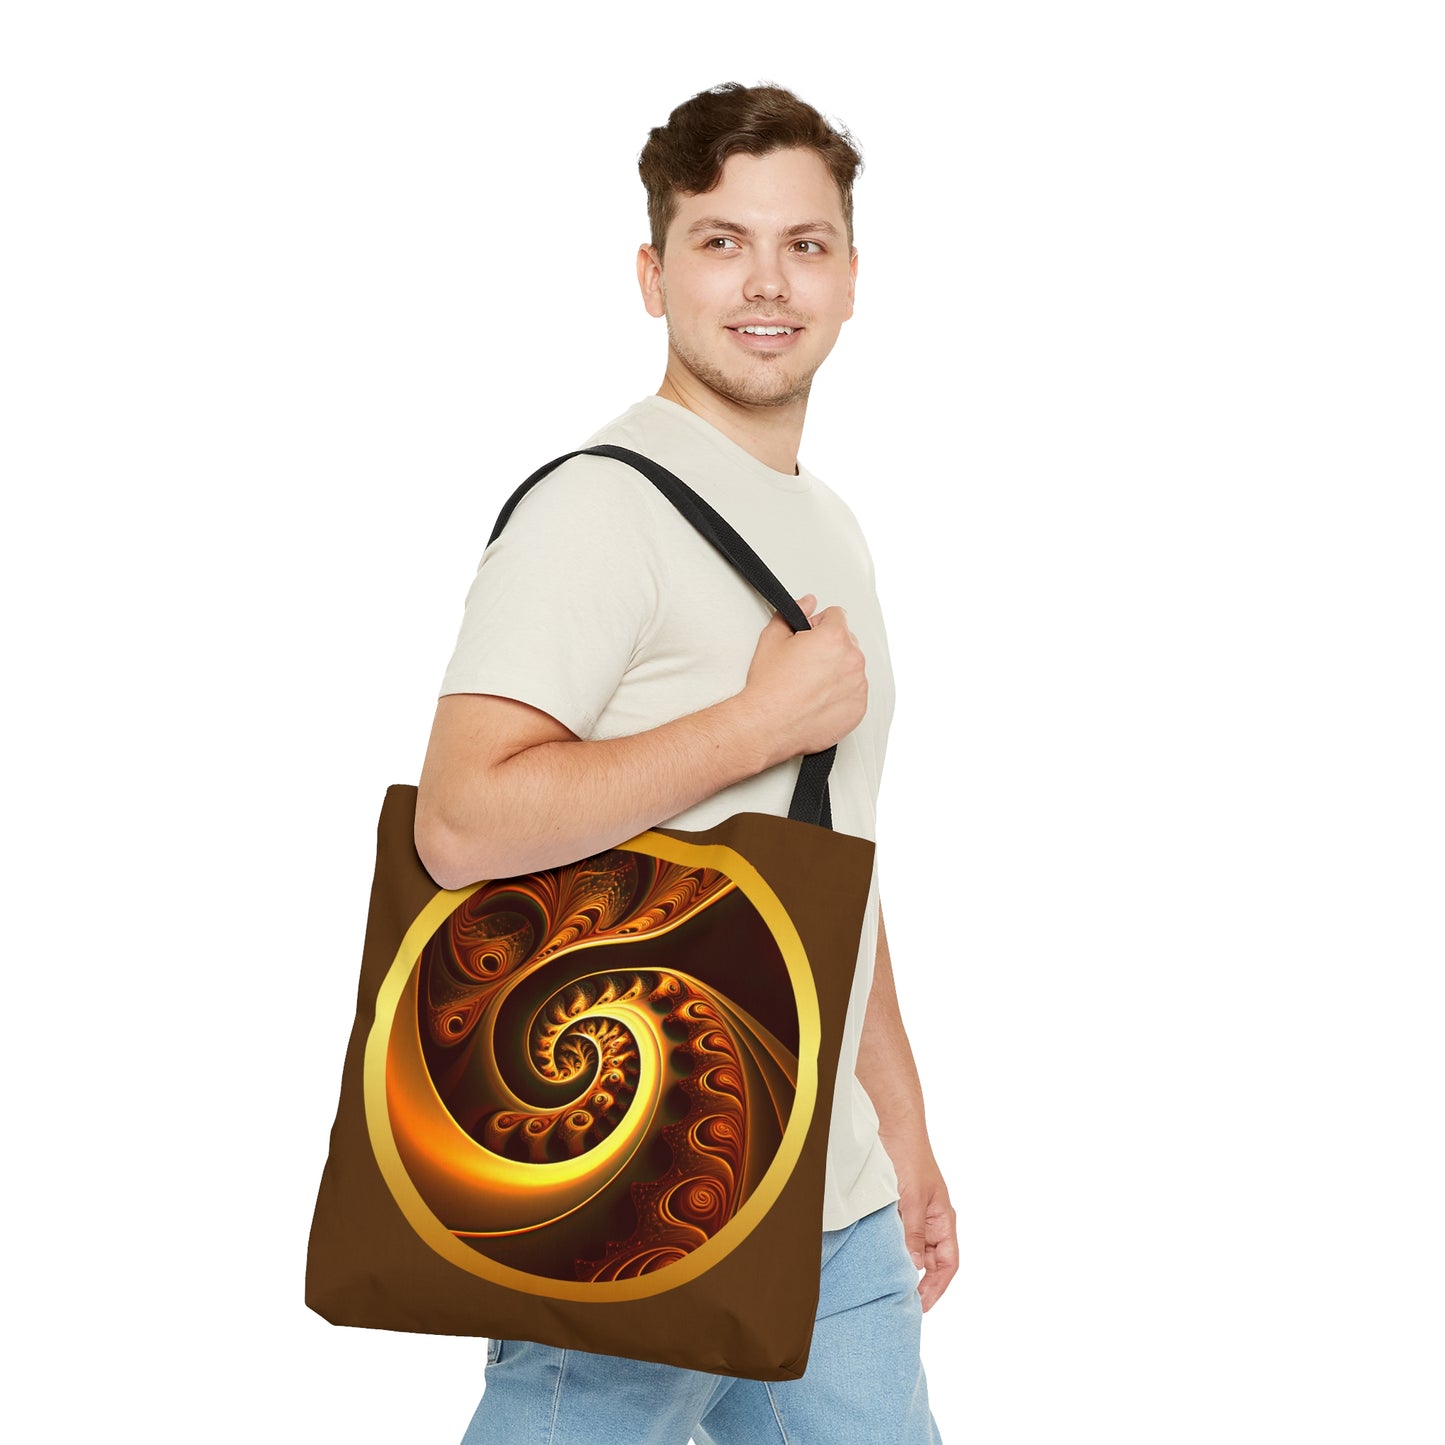 Gold Swirl Tote Bag